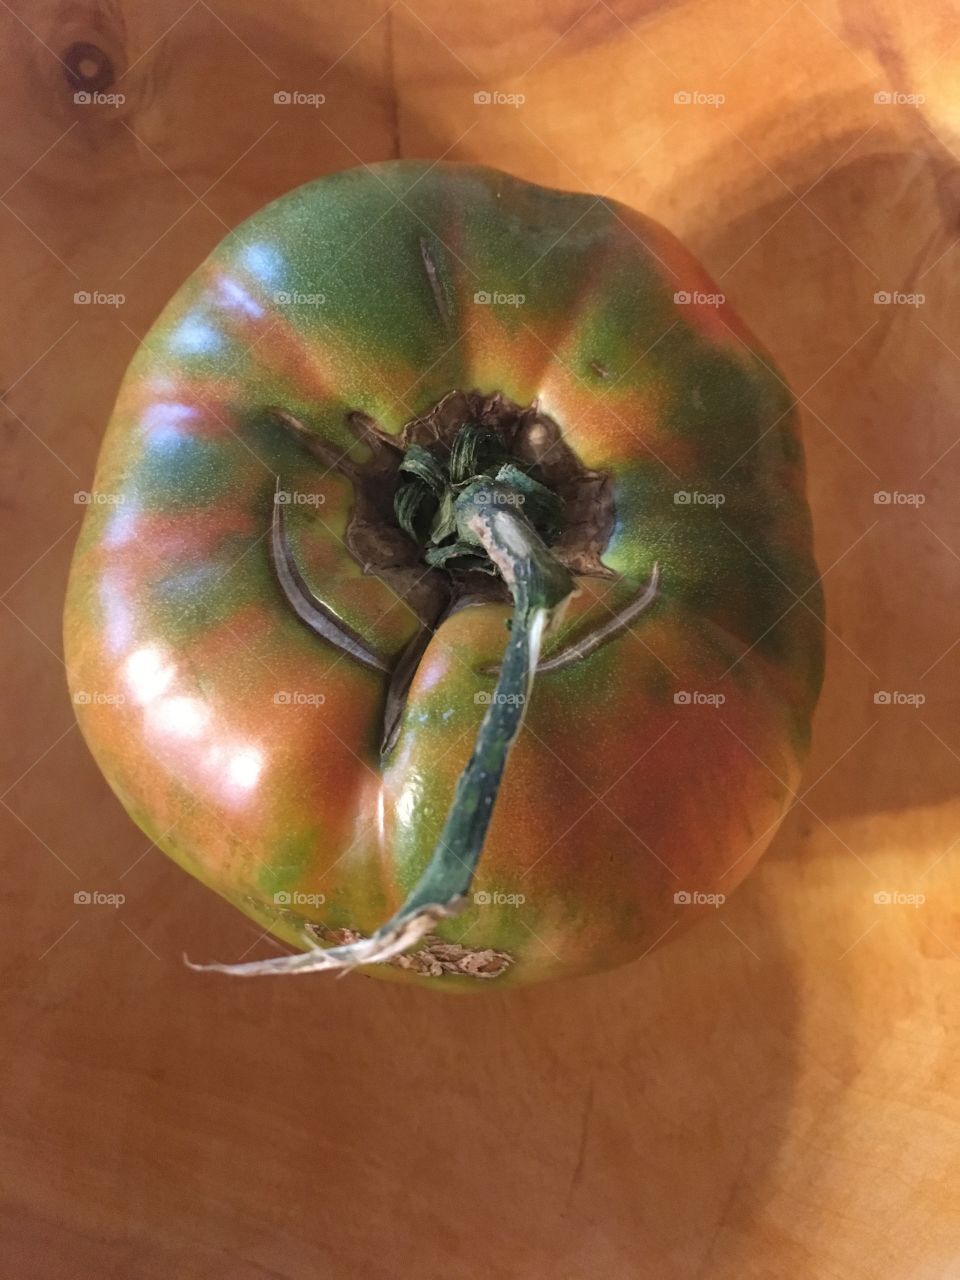 Tomato ripening off the vine